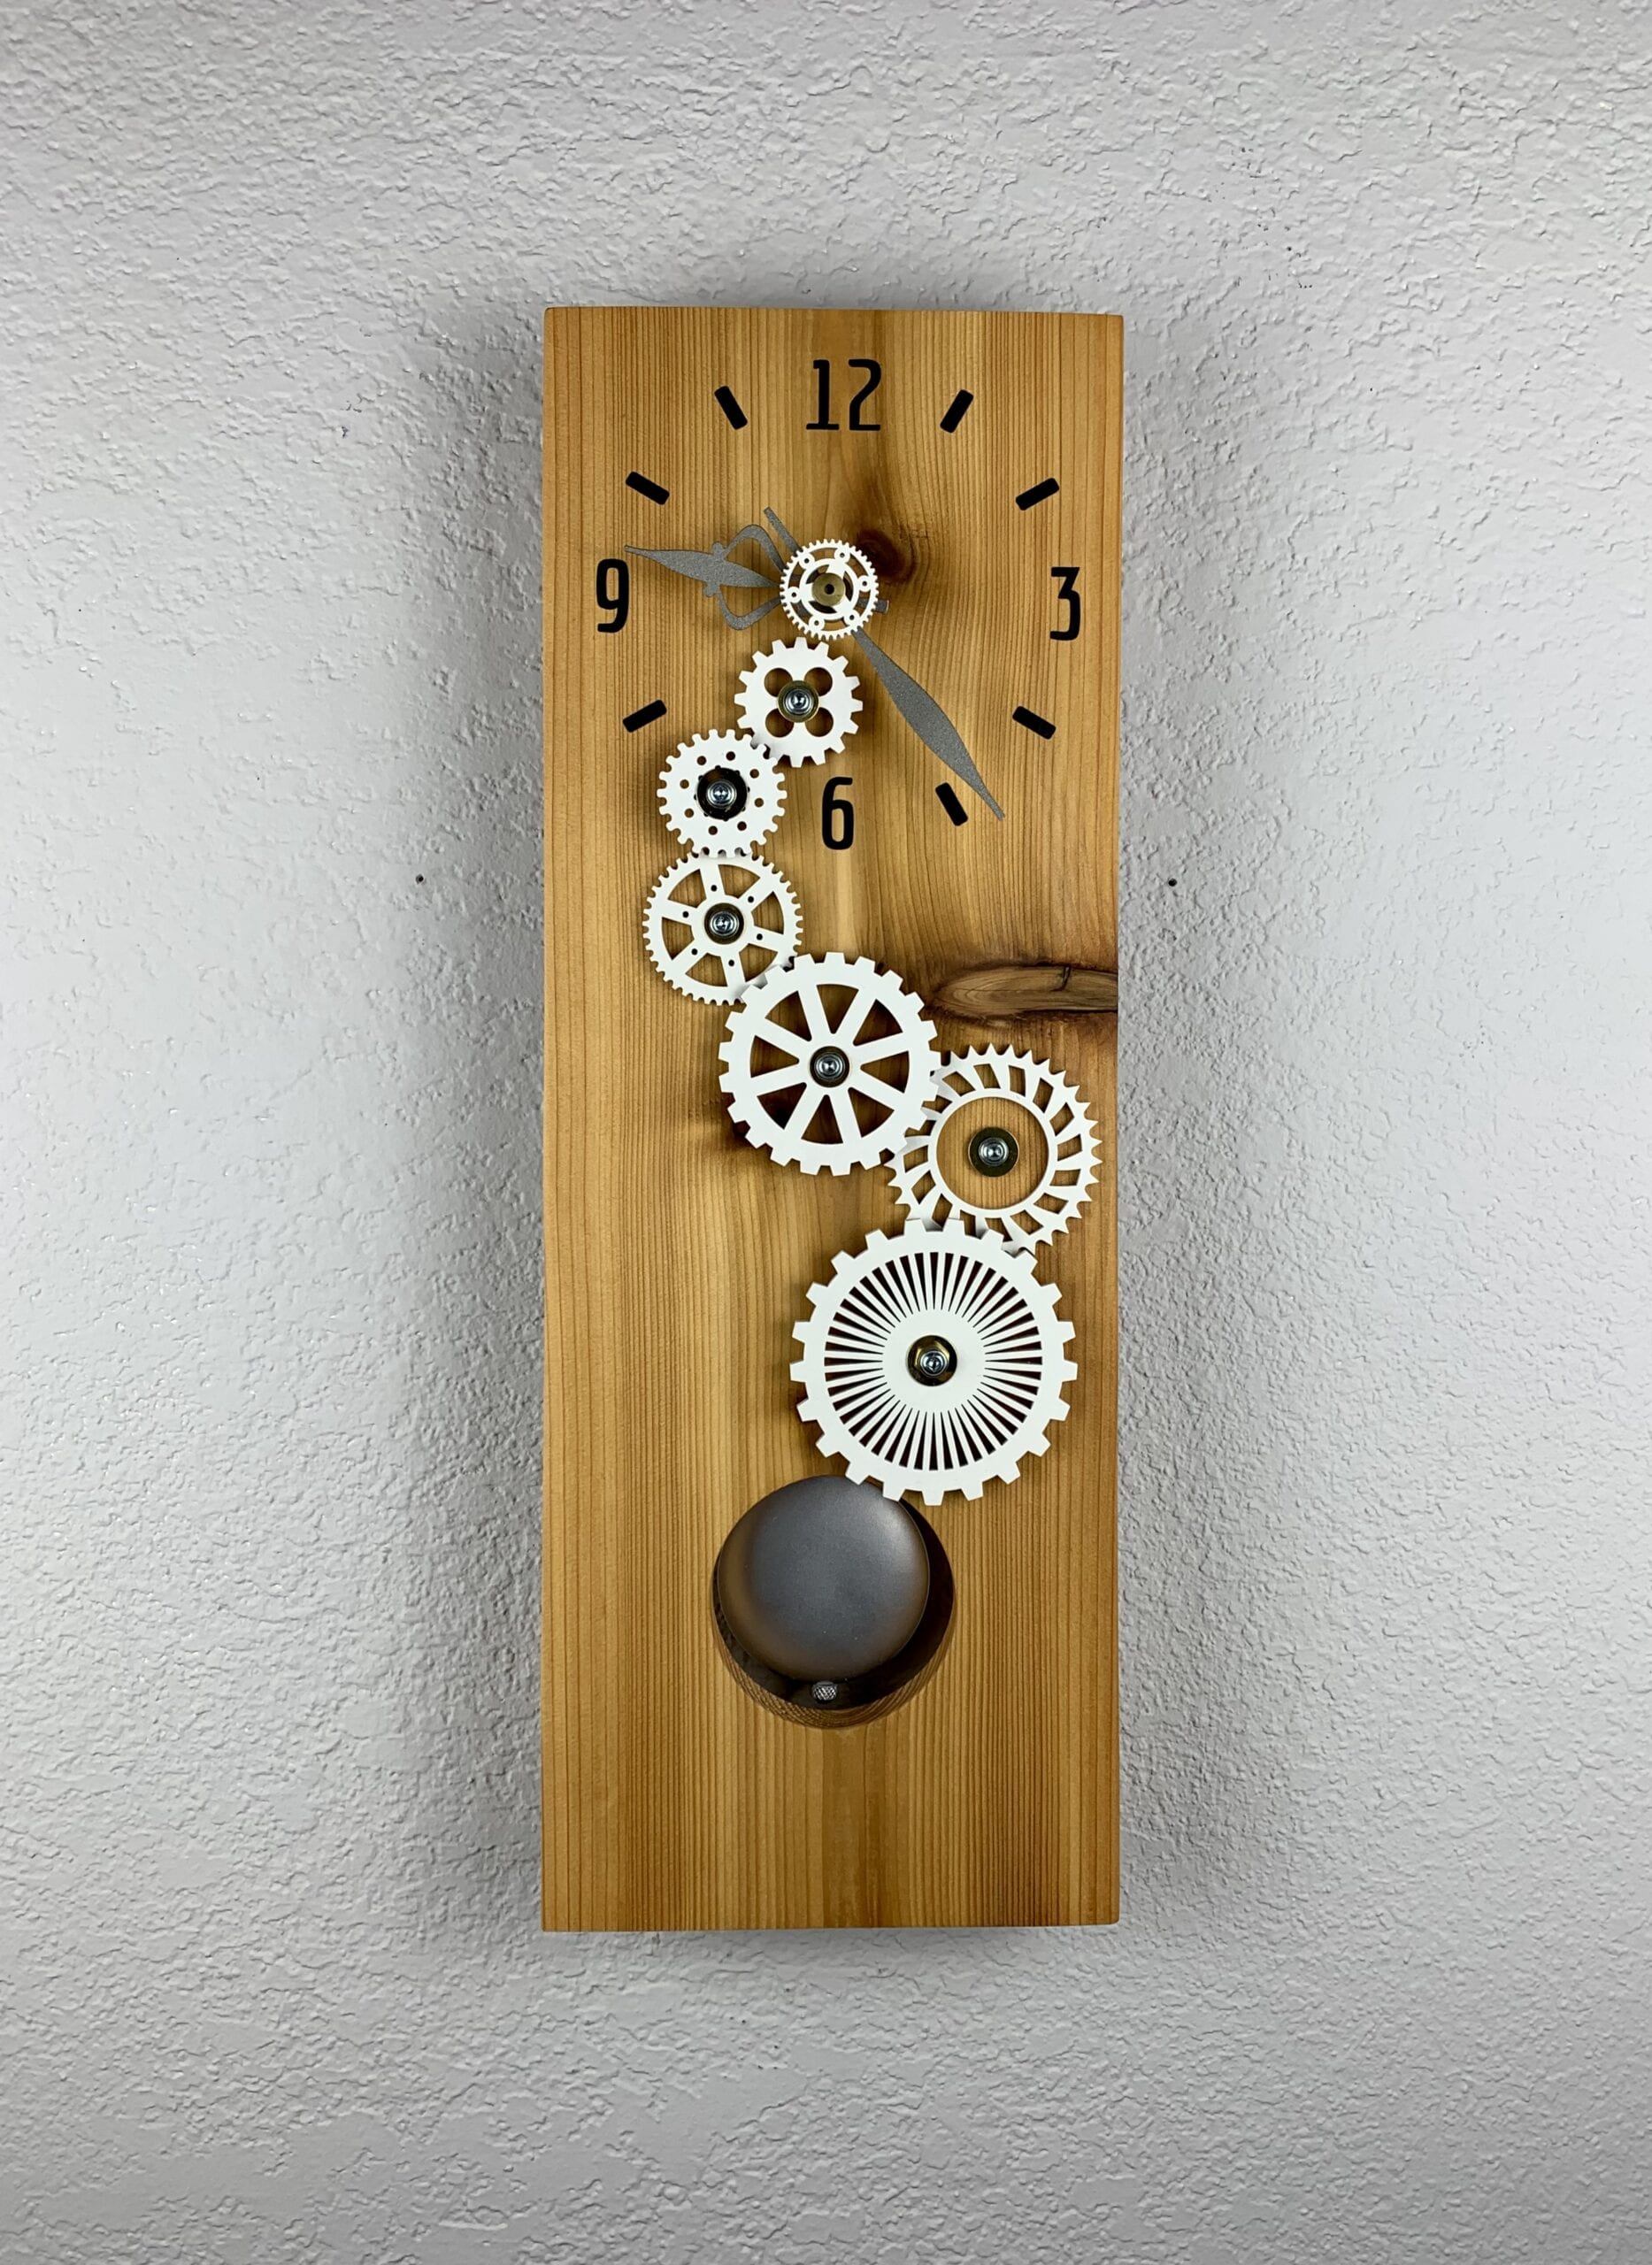 KingWood Cedar Pendulum Wall Clock with White Gears